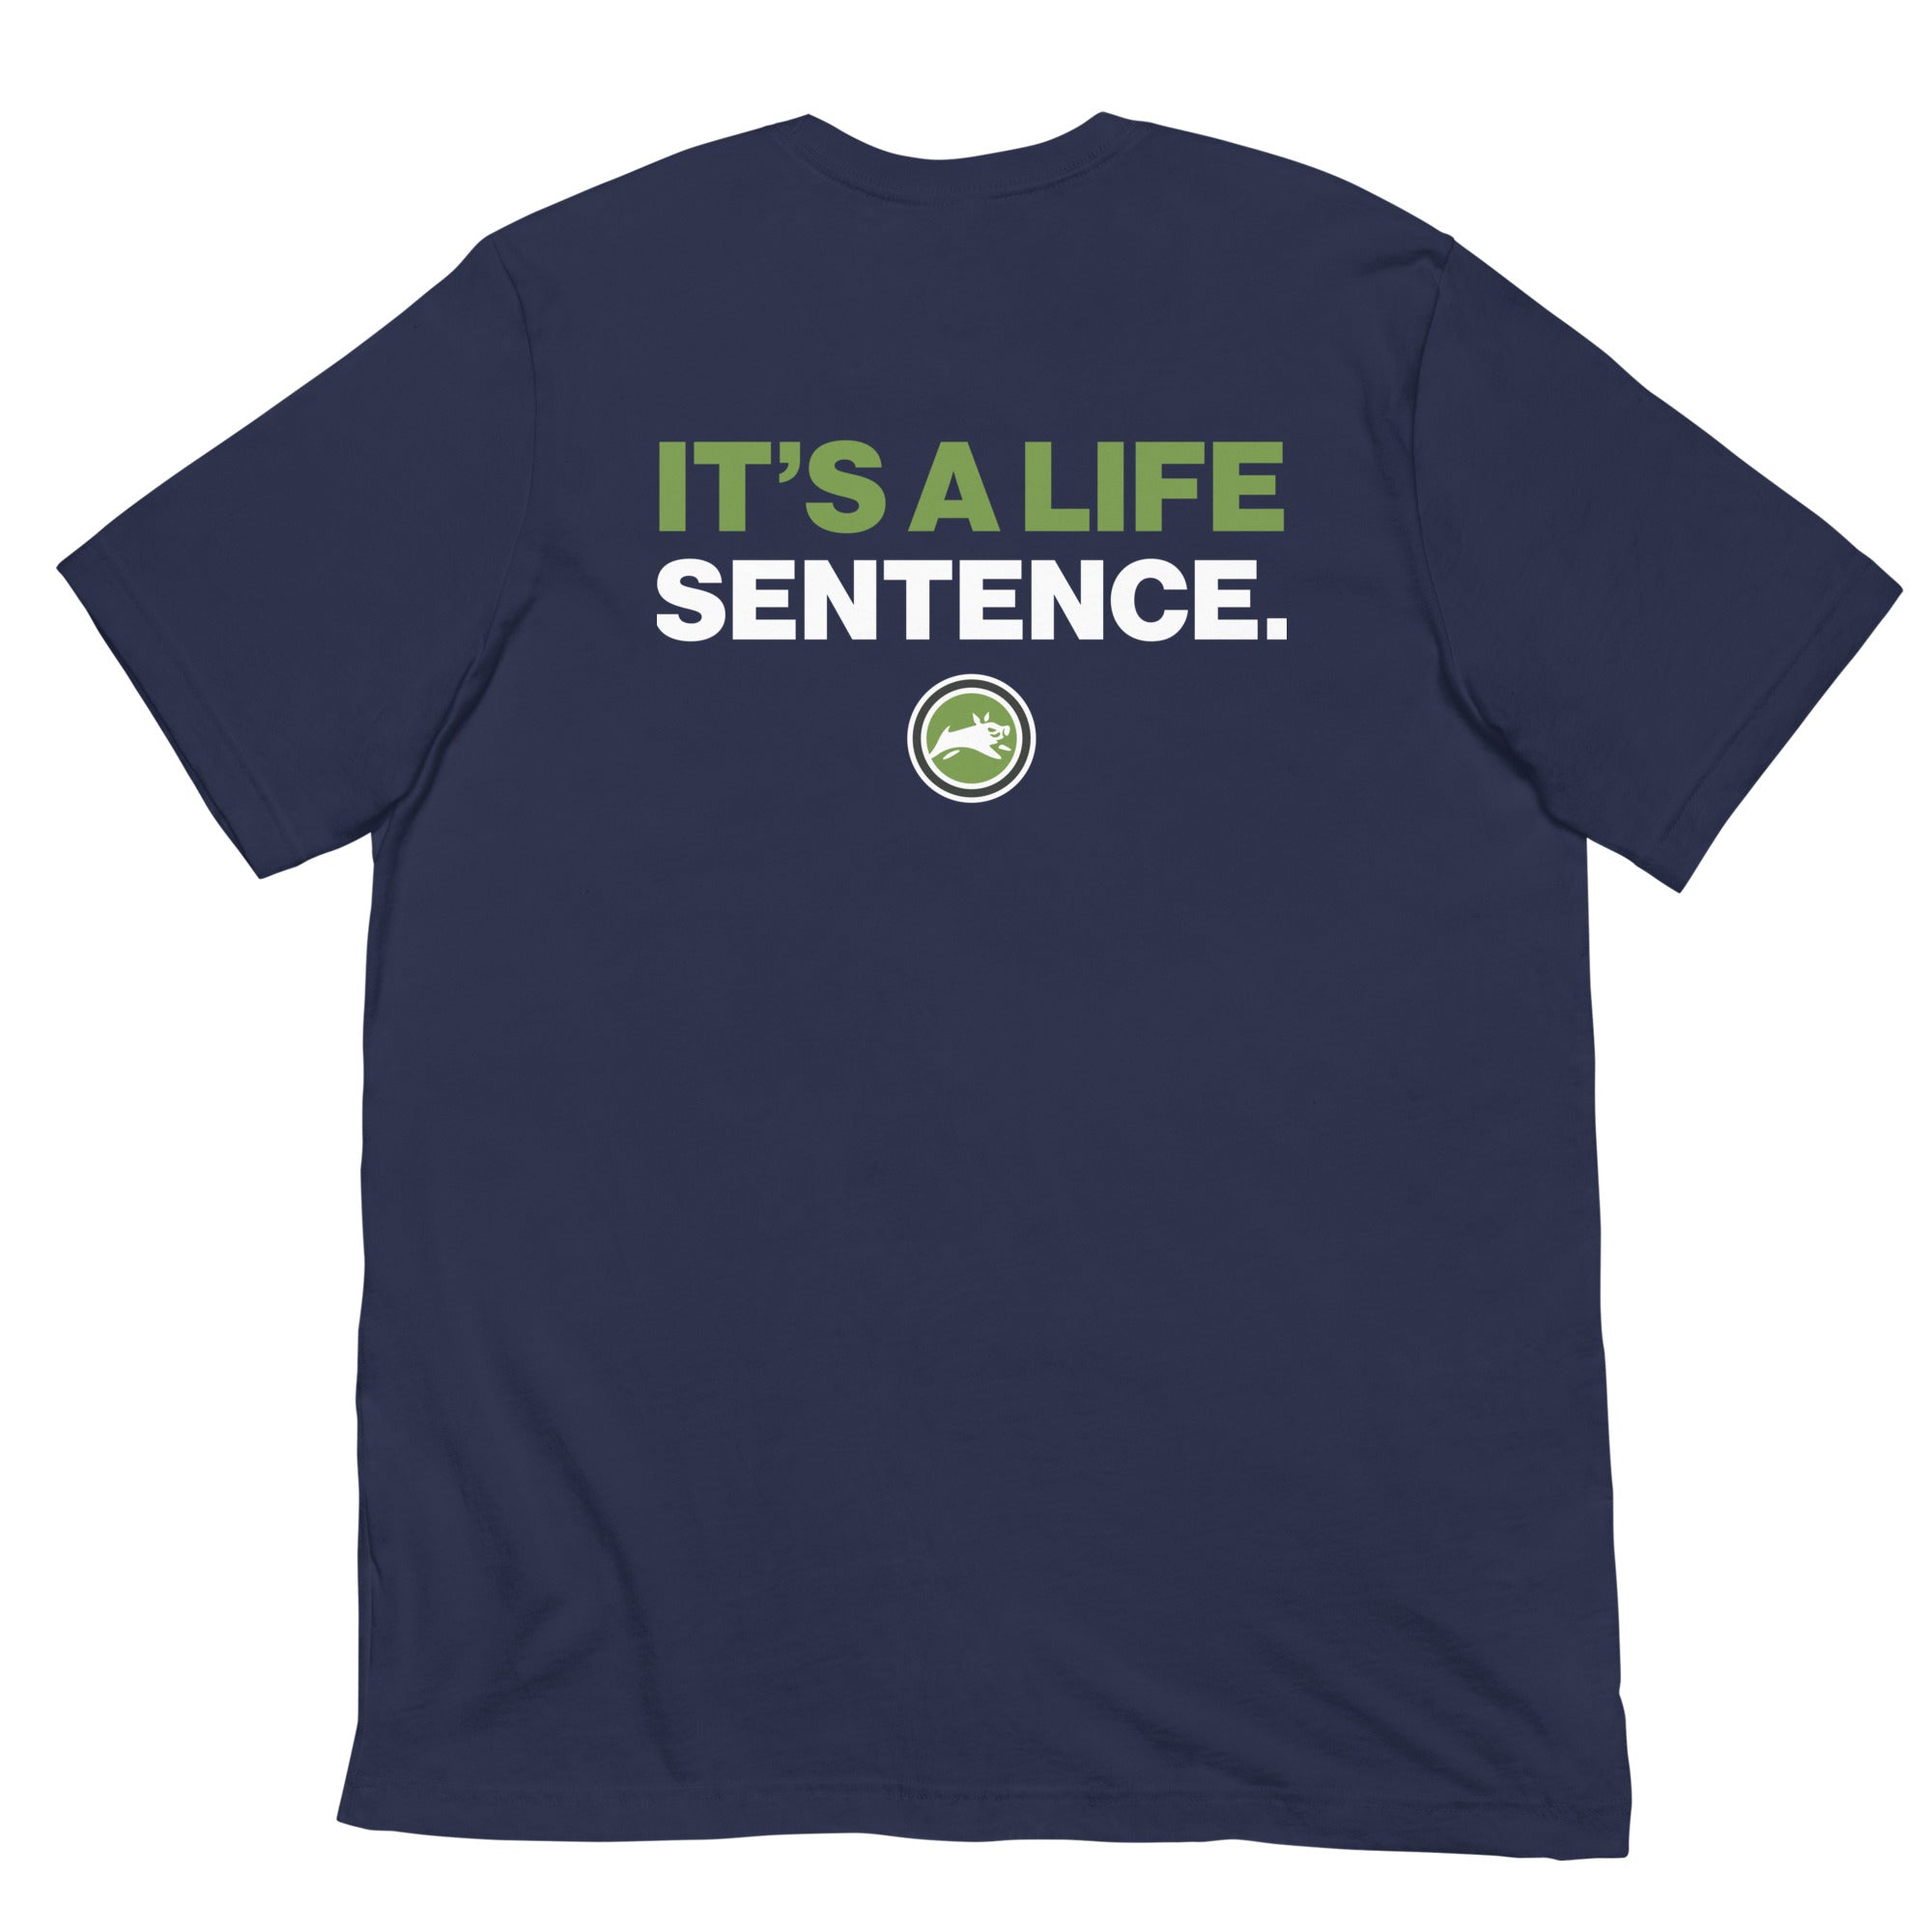 It's A Life Sentence. - Short-Sleeve Unisex T-Shirt